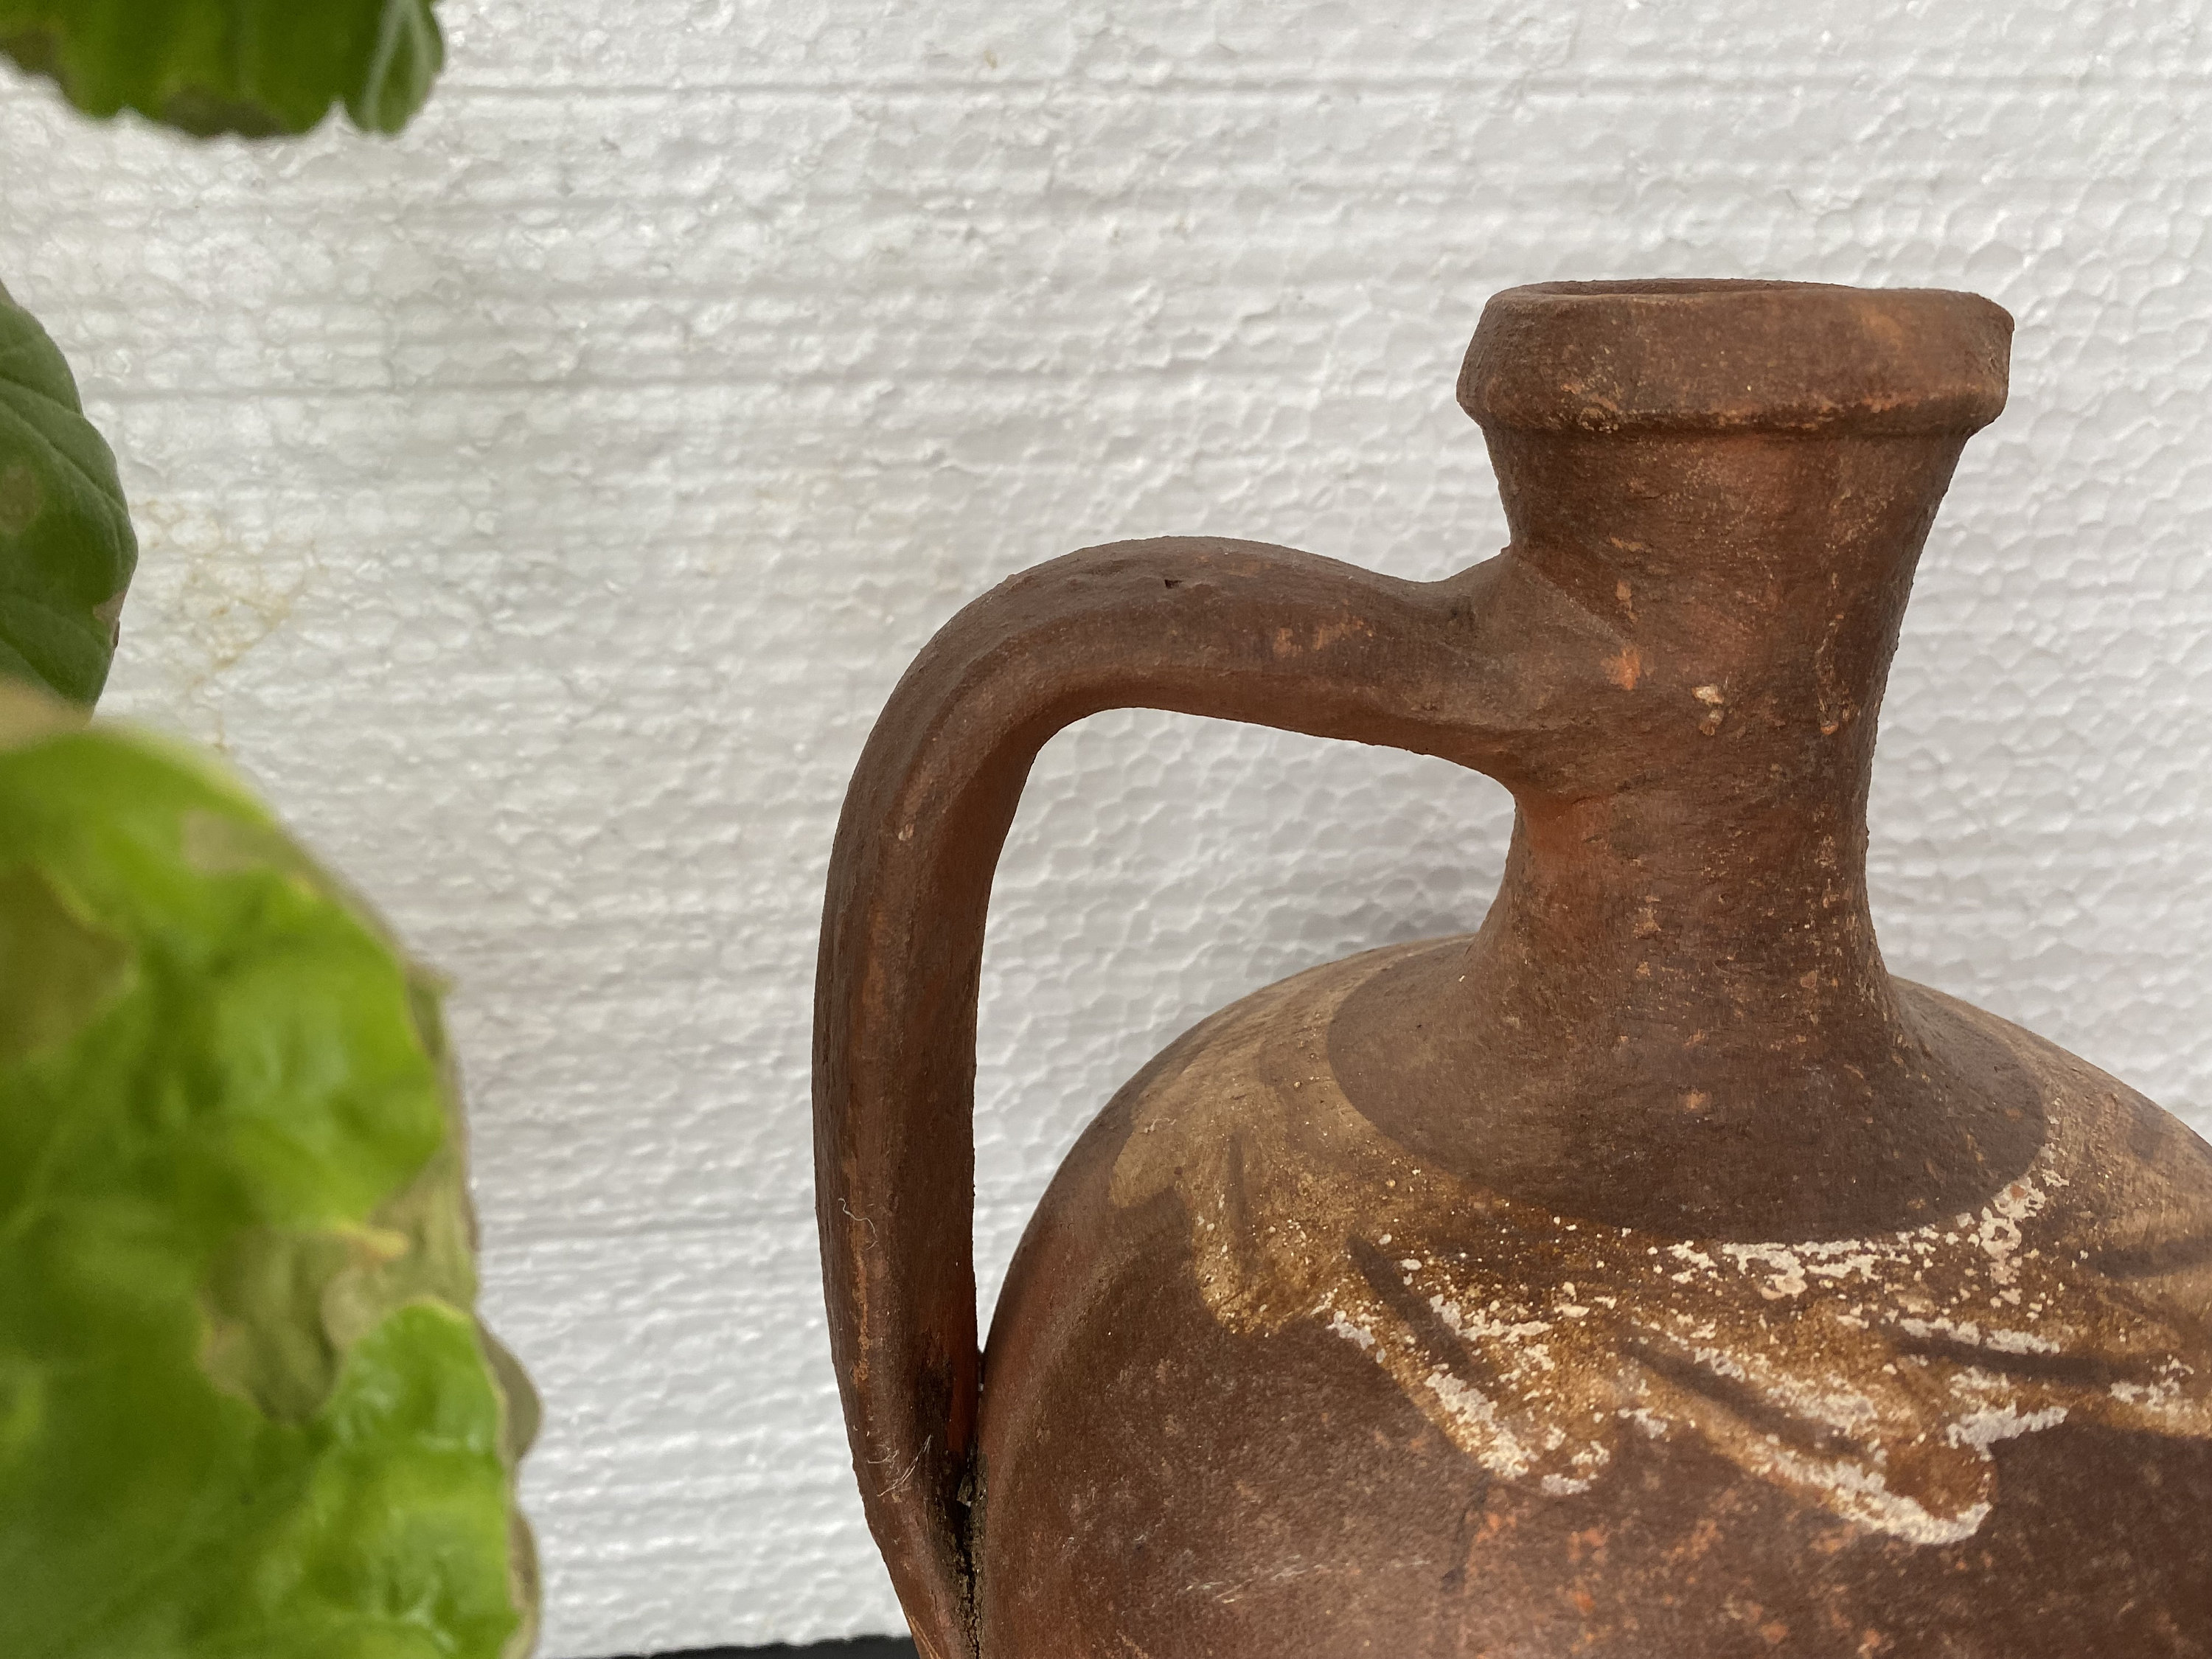 Old Clay Jug, Brown Clay Pot, Wabi Sabi Pottery, Rustic Decor, Old Clay  Vase, Primitive Black Pot, Farmhouse Decor 